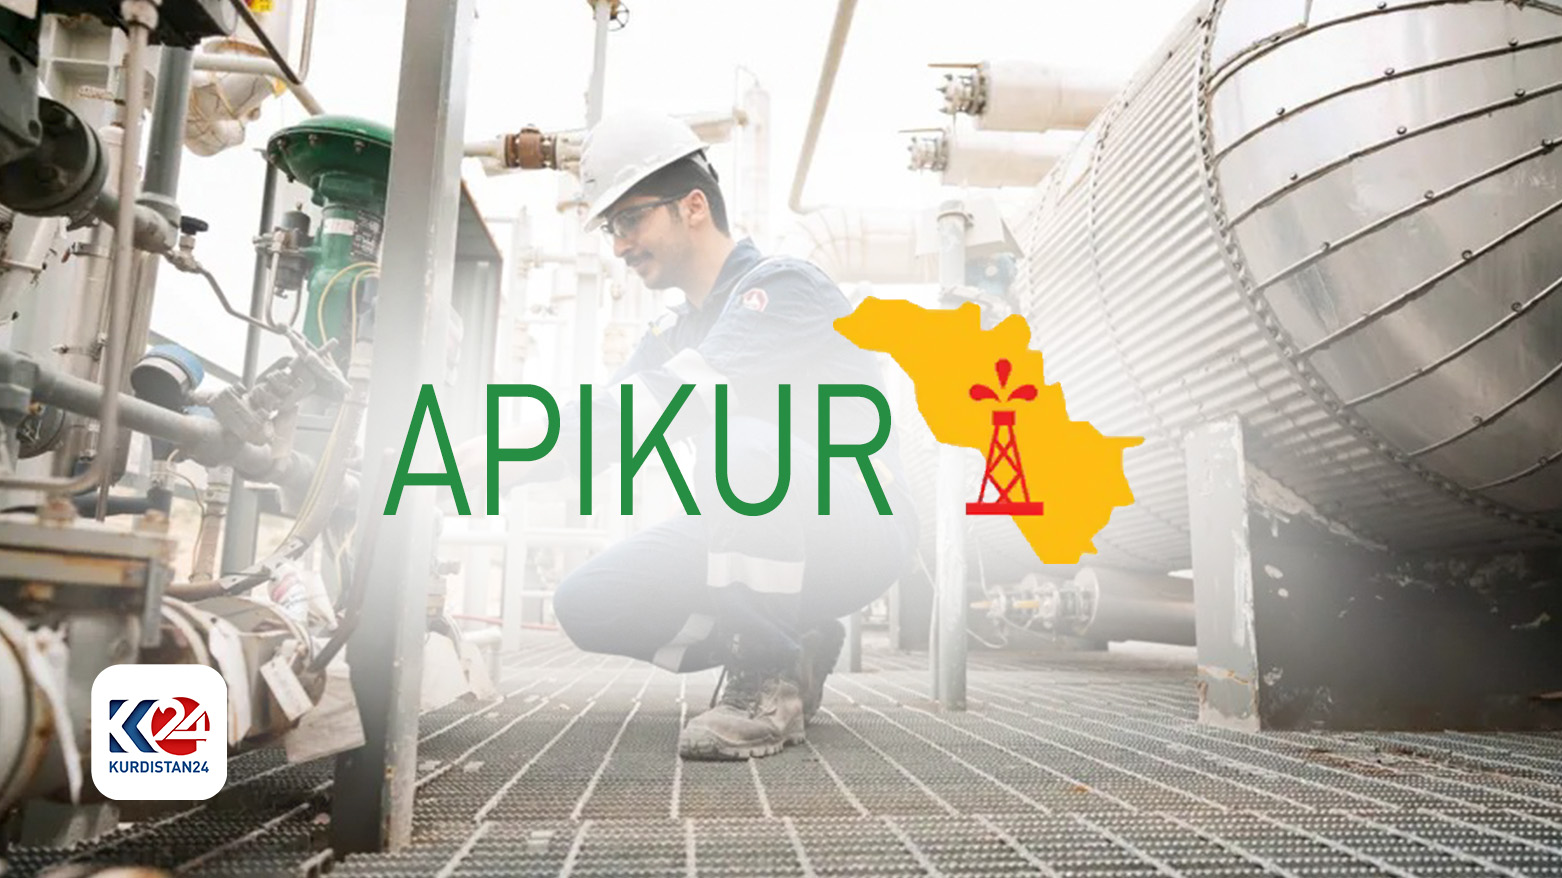 The Association of the Petroleum Industry of Kurdistan (APIKUR). (Photo: Kurdistan 24)